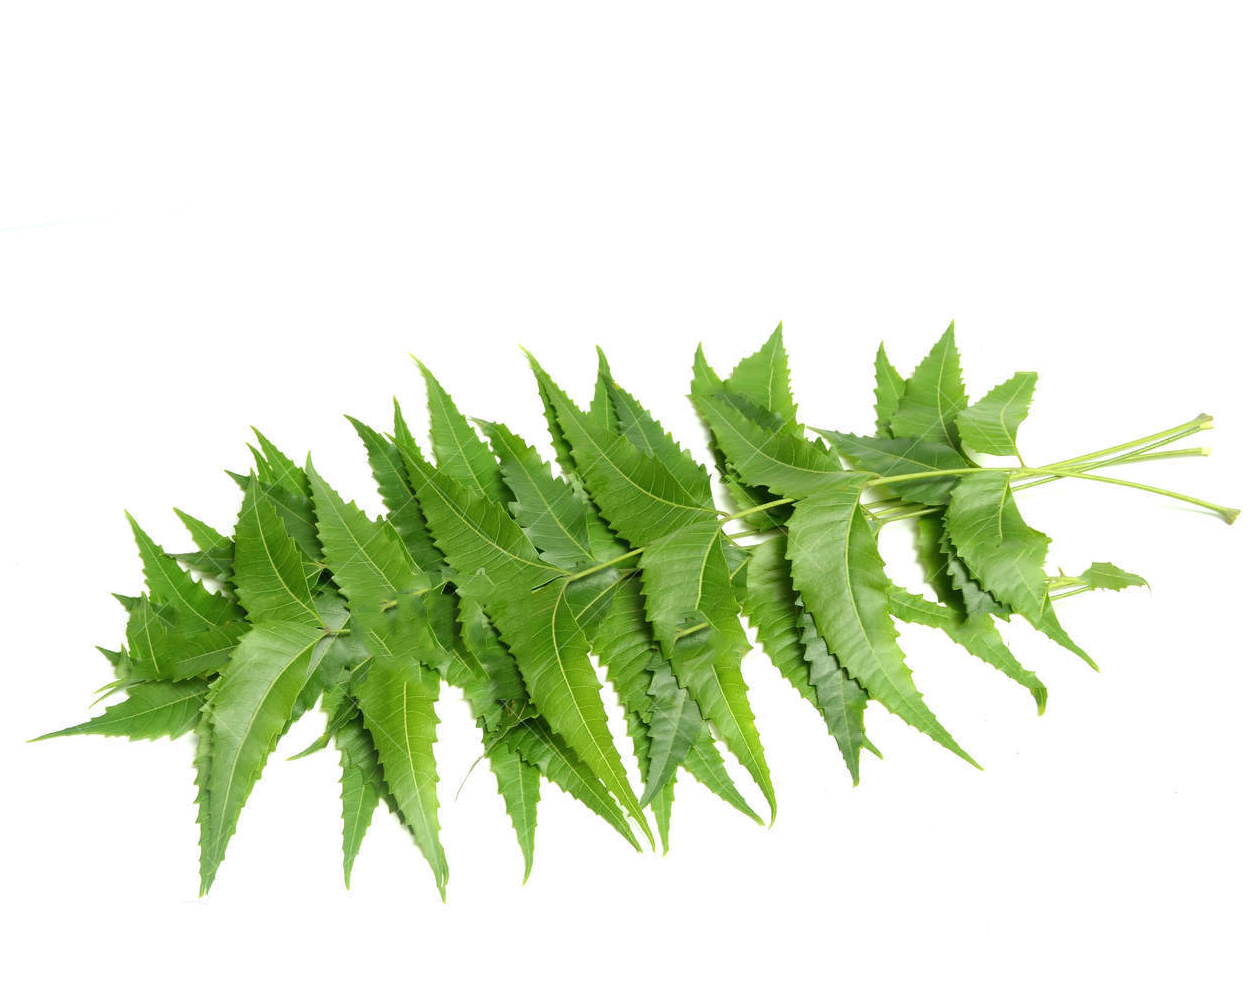 Media azadirachta leaf extract